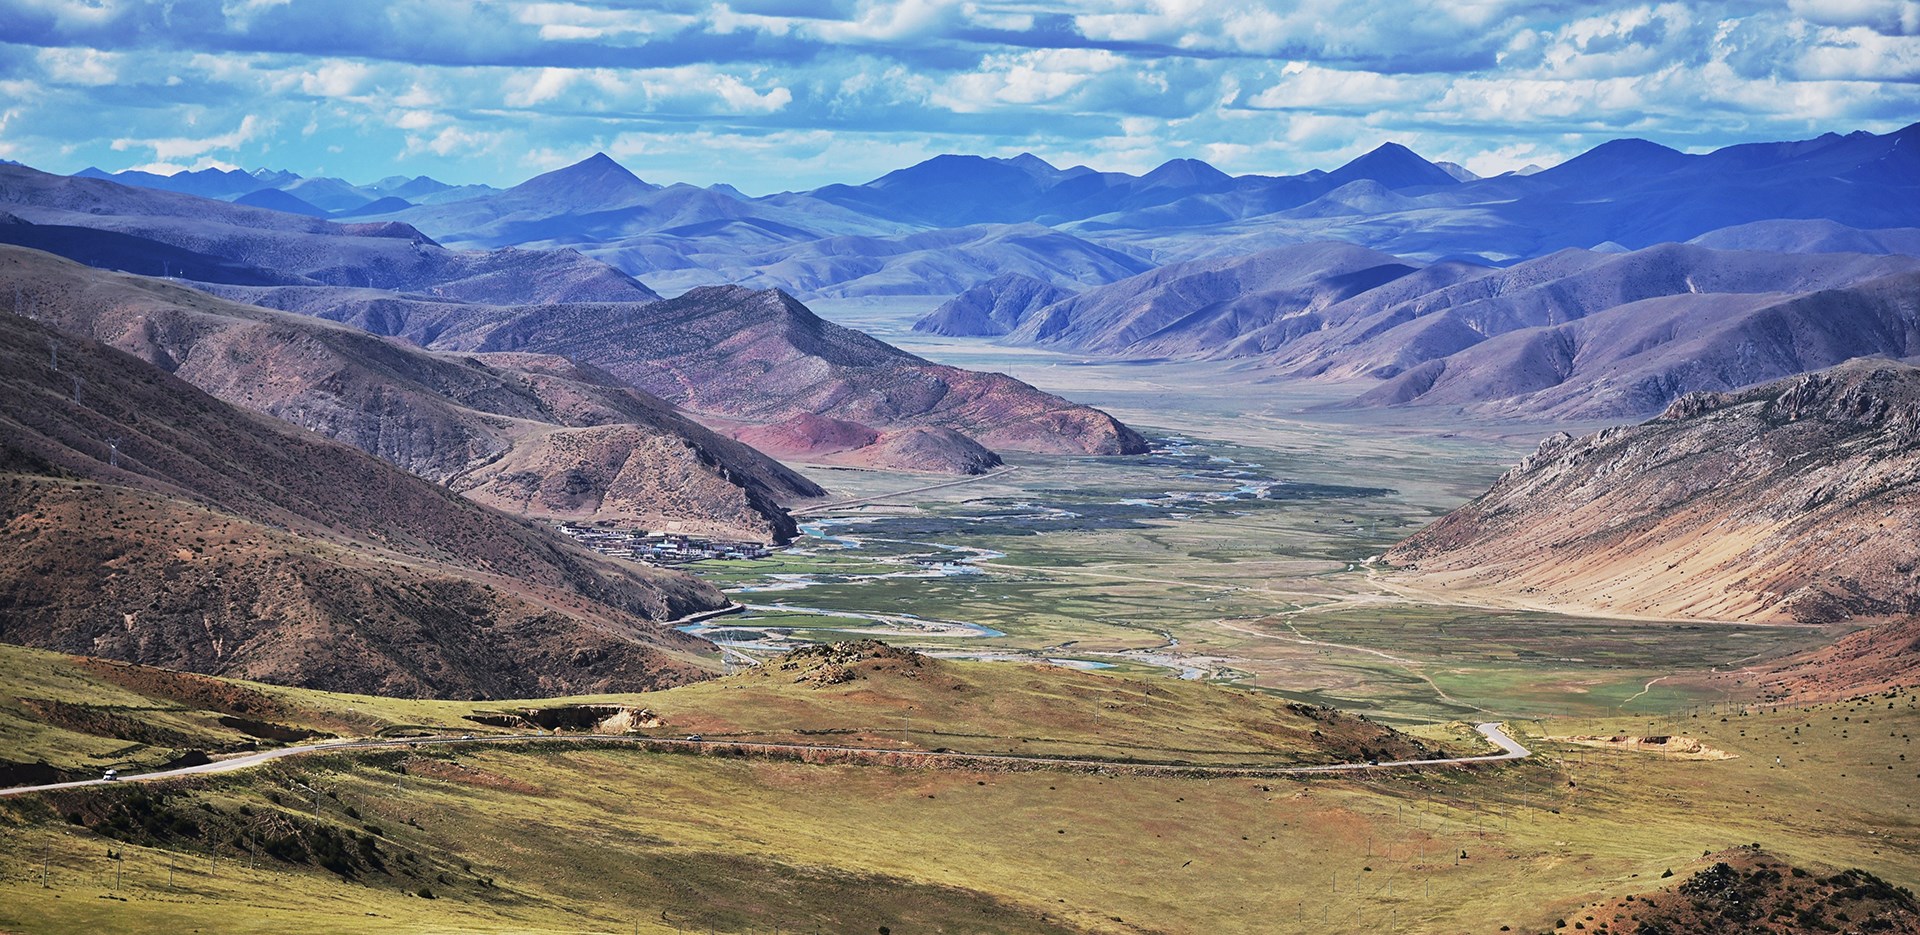 Voyage en Voiture Louée du Sichuan au Tibet via Yun’nan